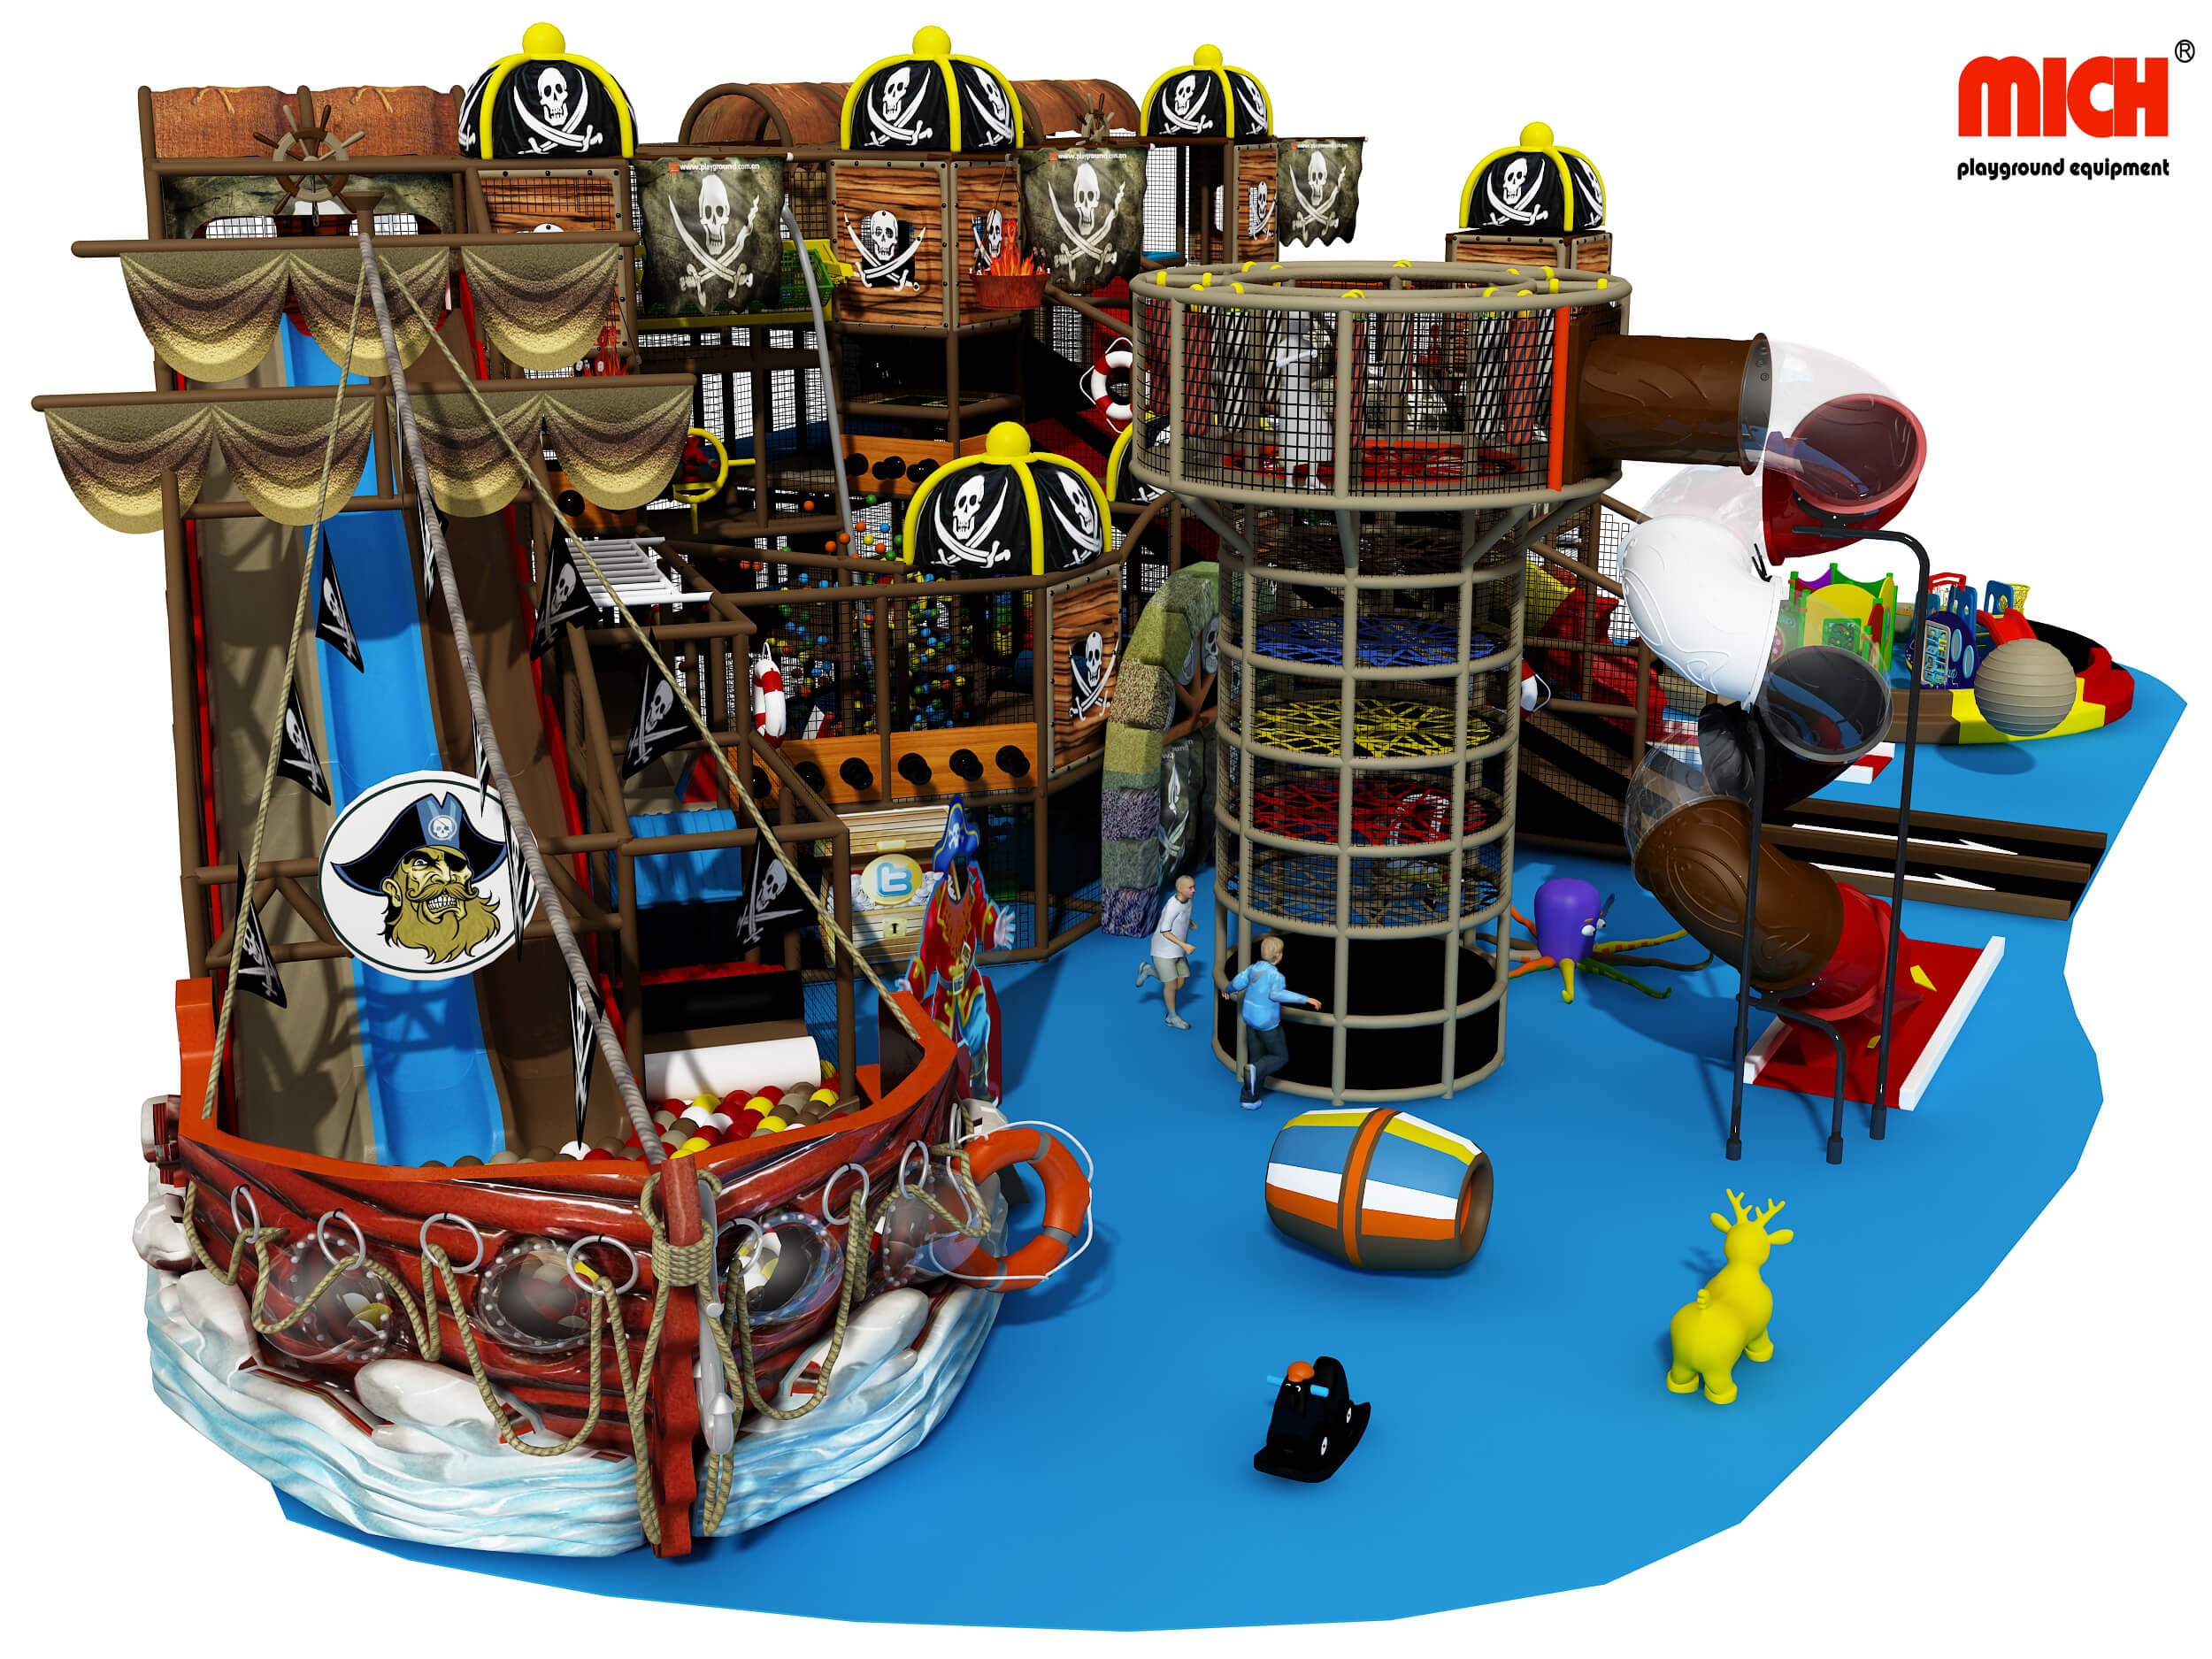 Centro de juego suave de niños con temática pirata